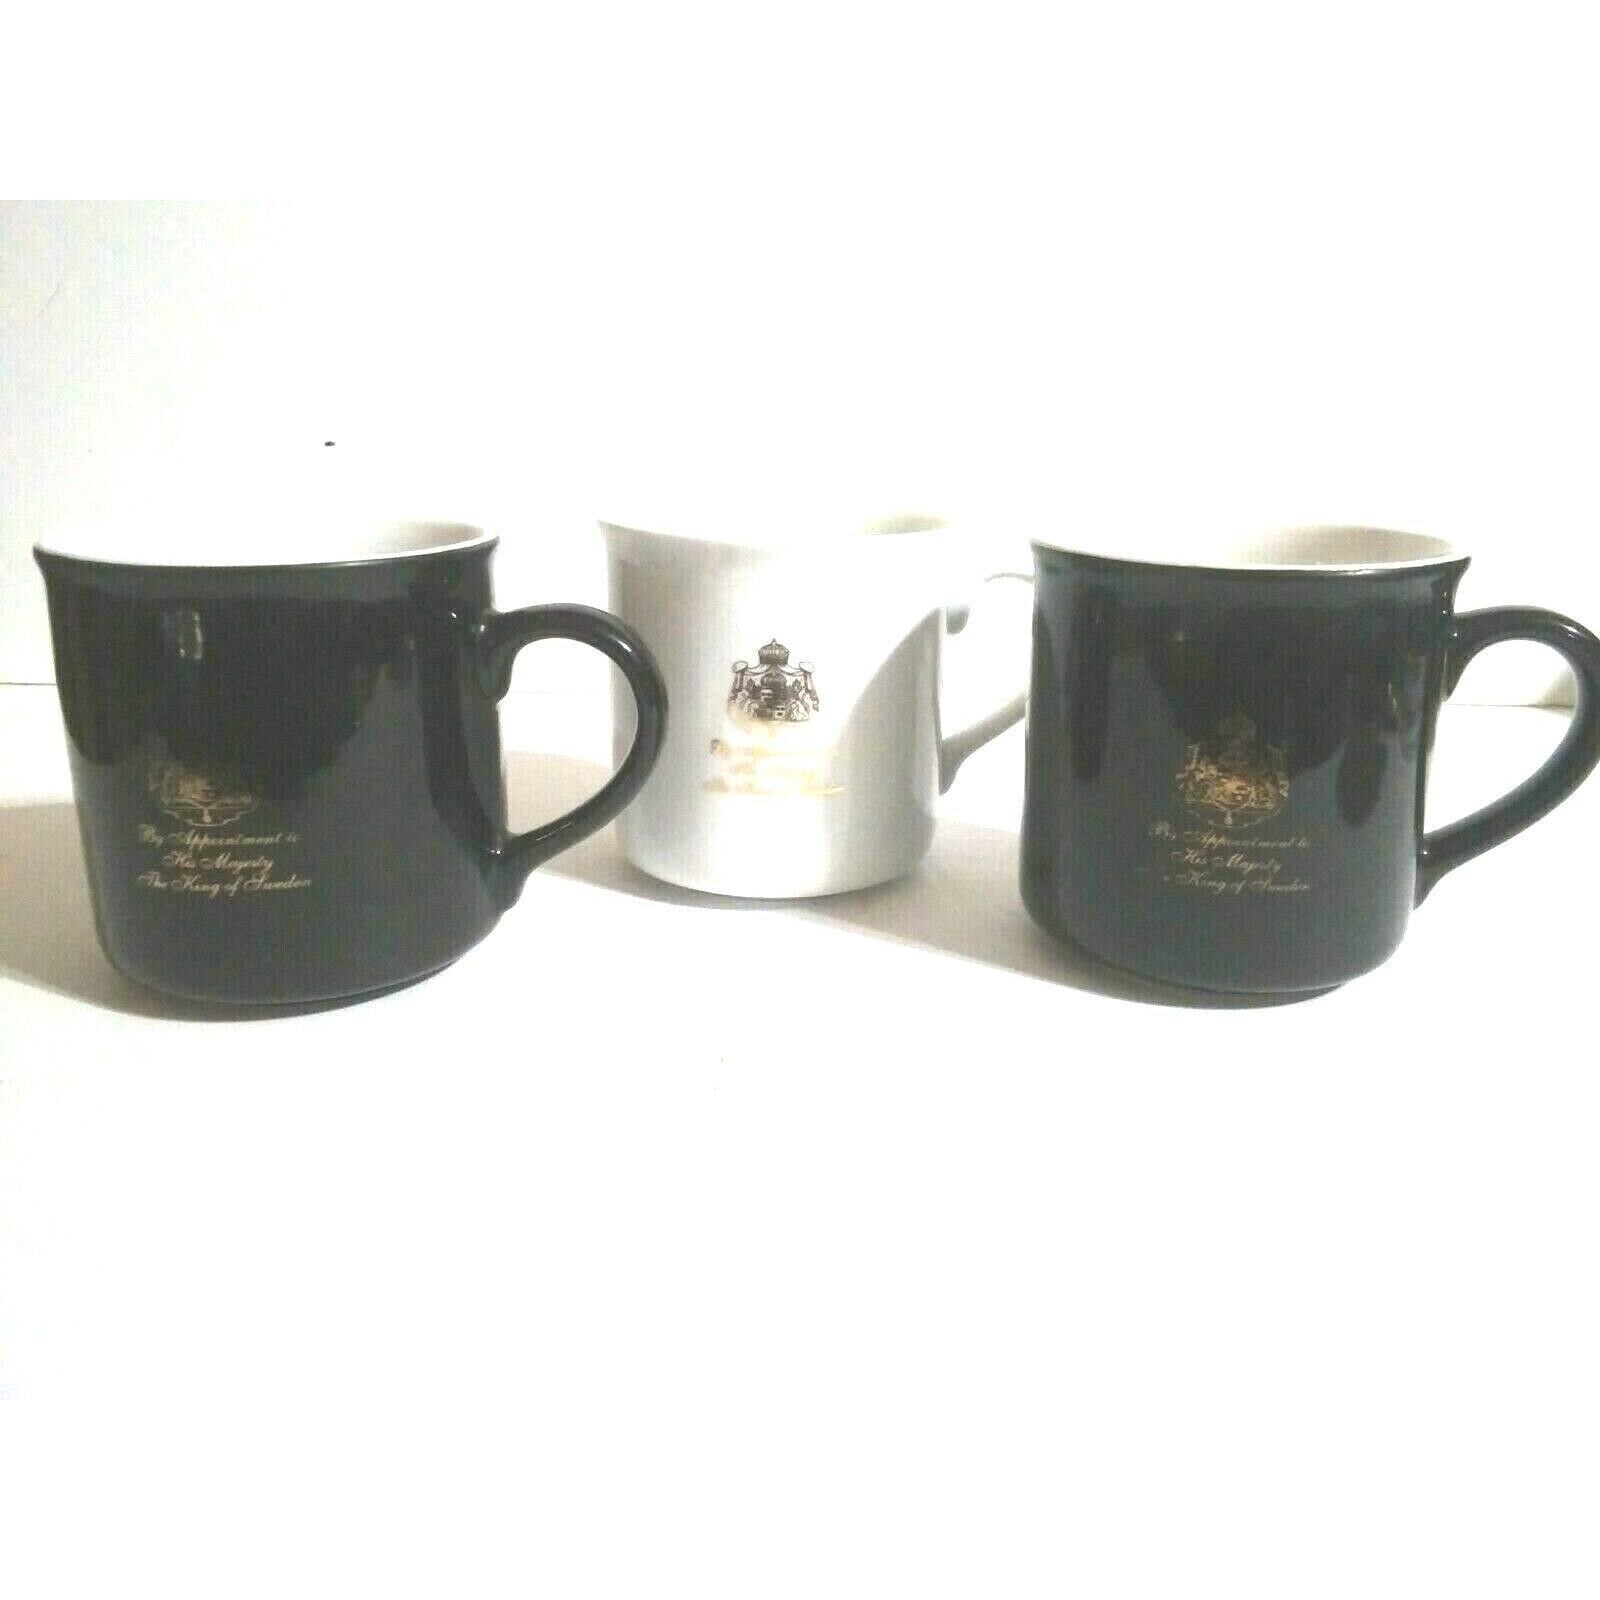 Gevalia Kaffe Coffee Cup Mug Lot Of 3 Navy Blue and White